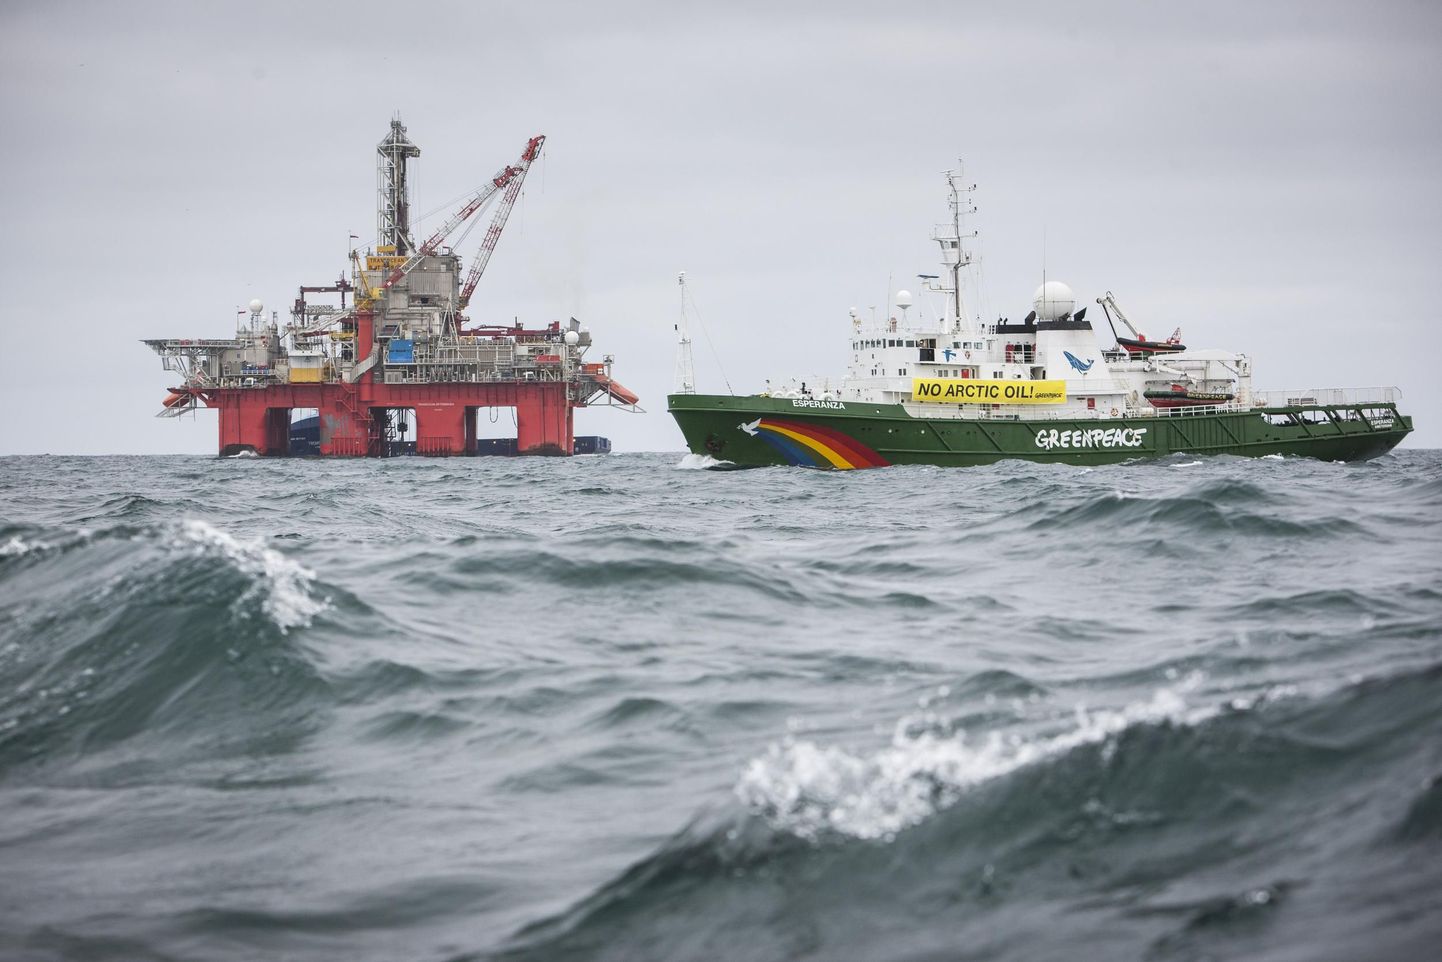 Greenpeace'i laev Esperanza ja Statoili naftaplatvorm Transocean Spitsbergen Barentsi merel.